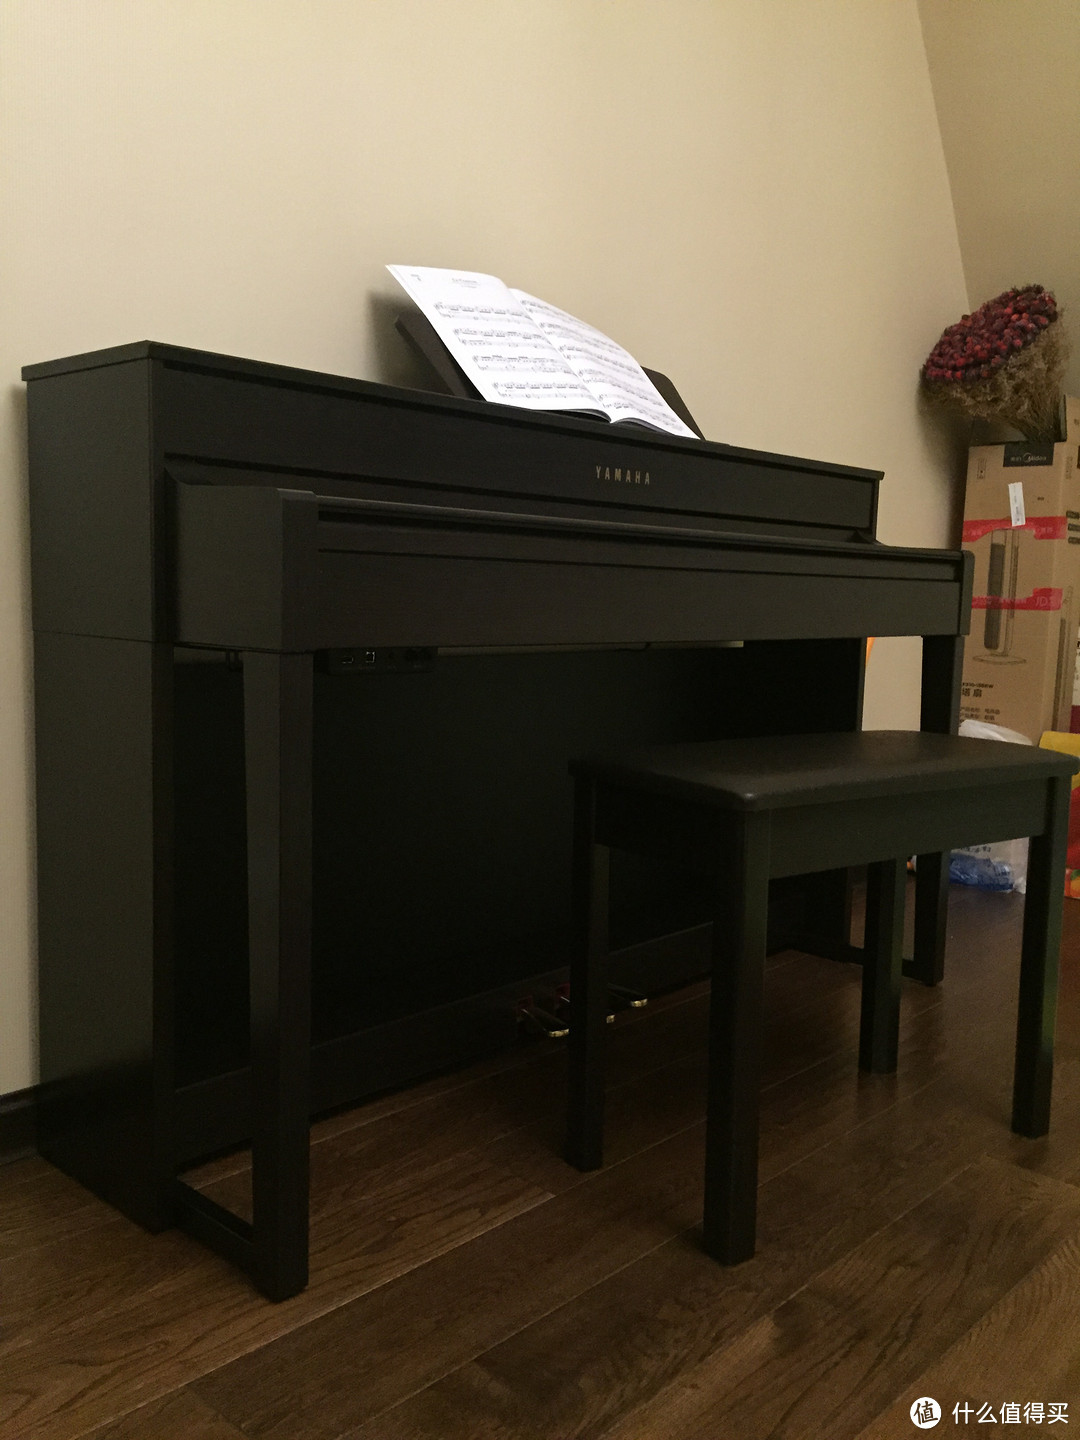 YAMAHA电钢琴 [CLAVINOVA系列] CLP-535开箱